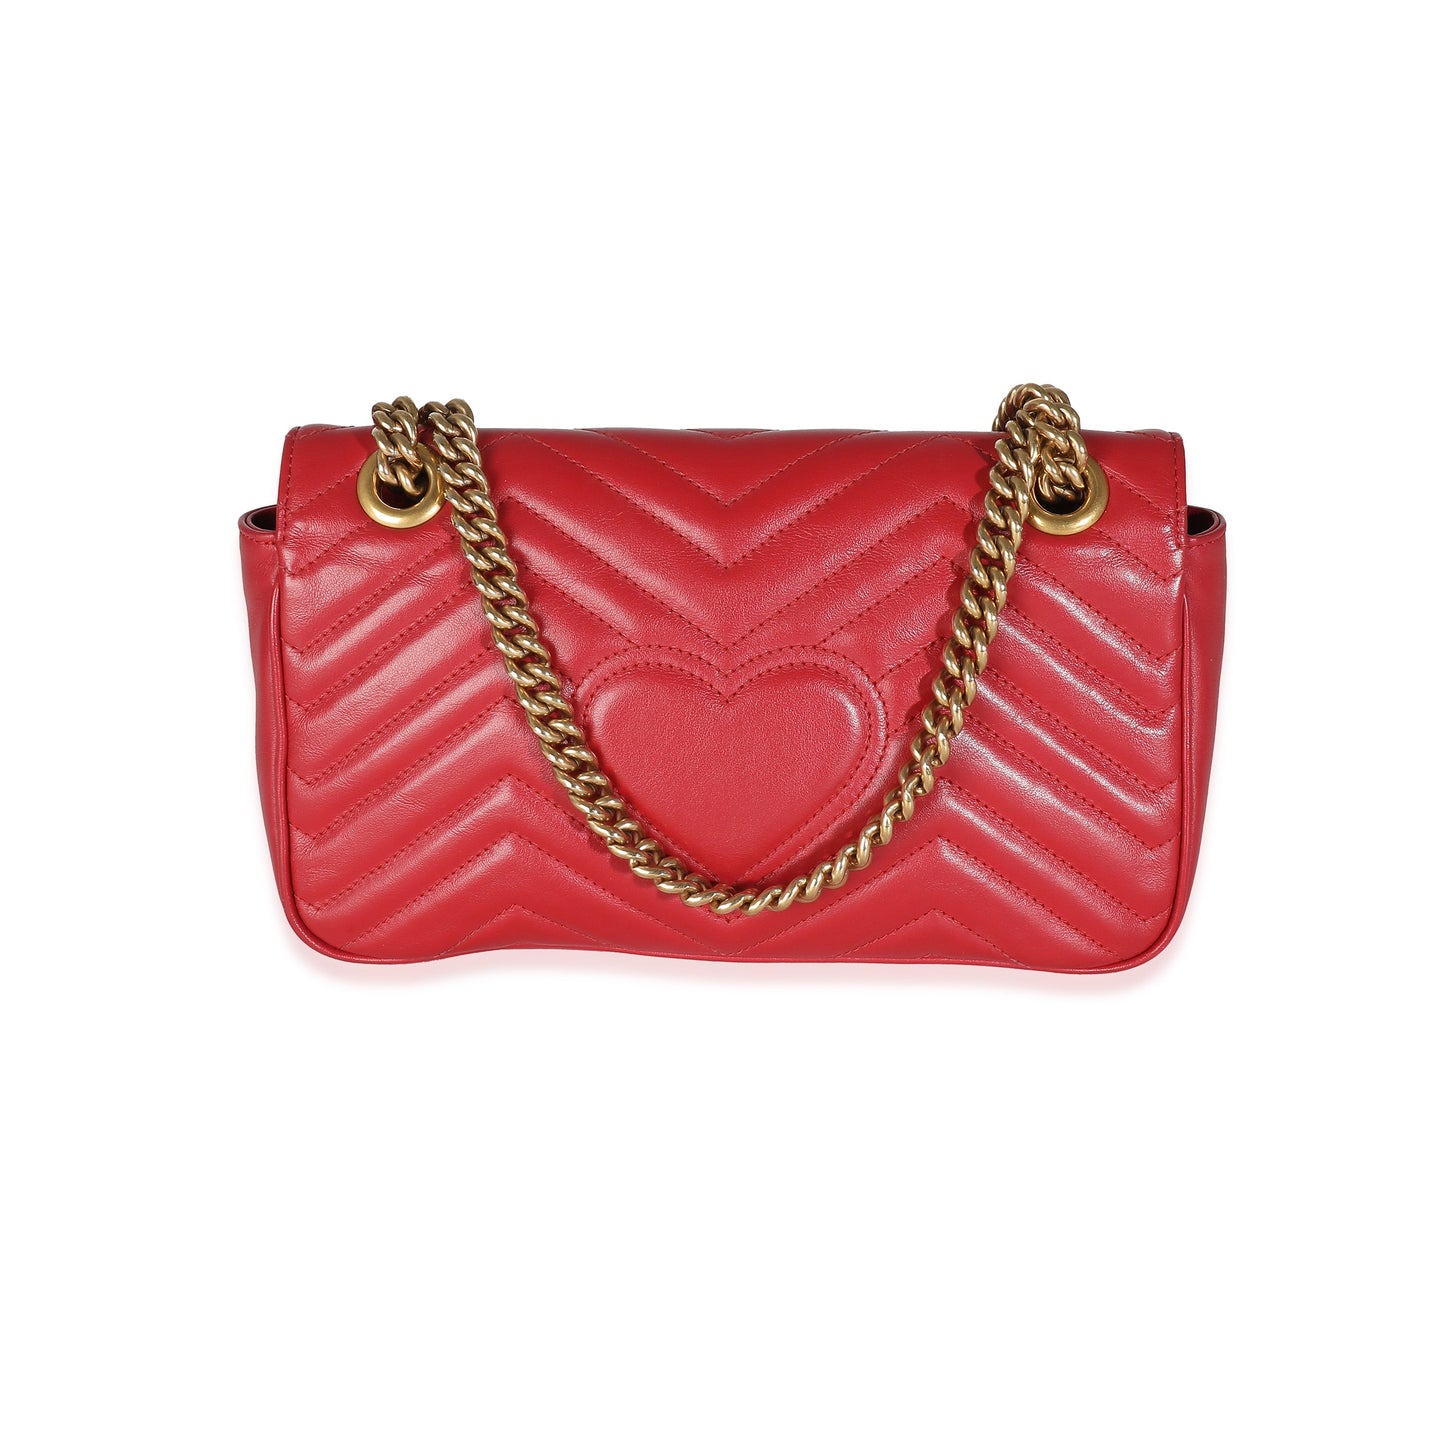 GUCCI - Red Matelasse Calfskin Small GG Marmont Bag